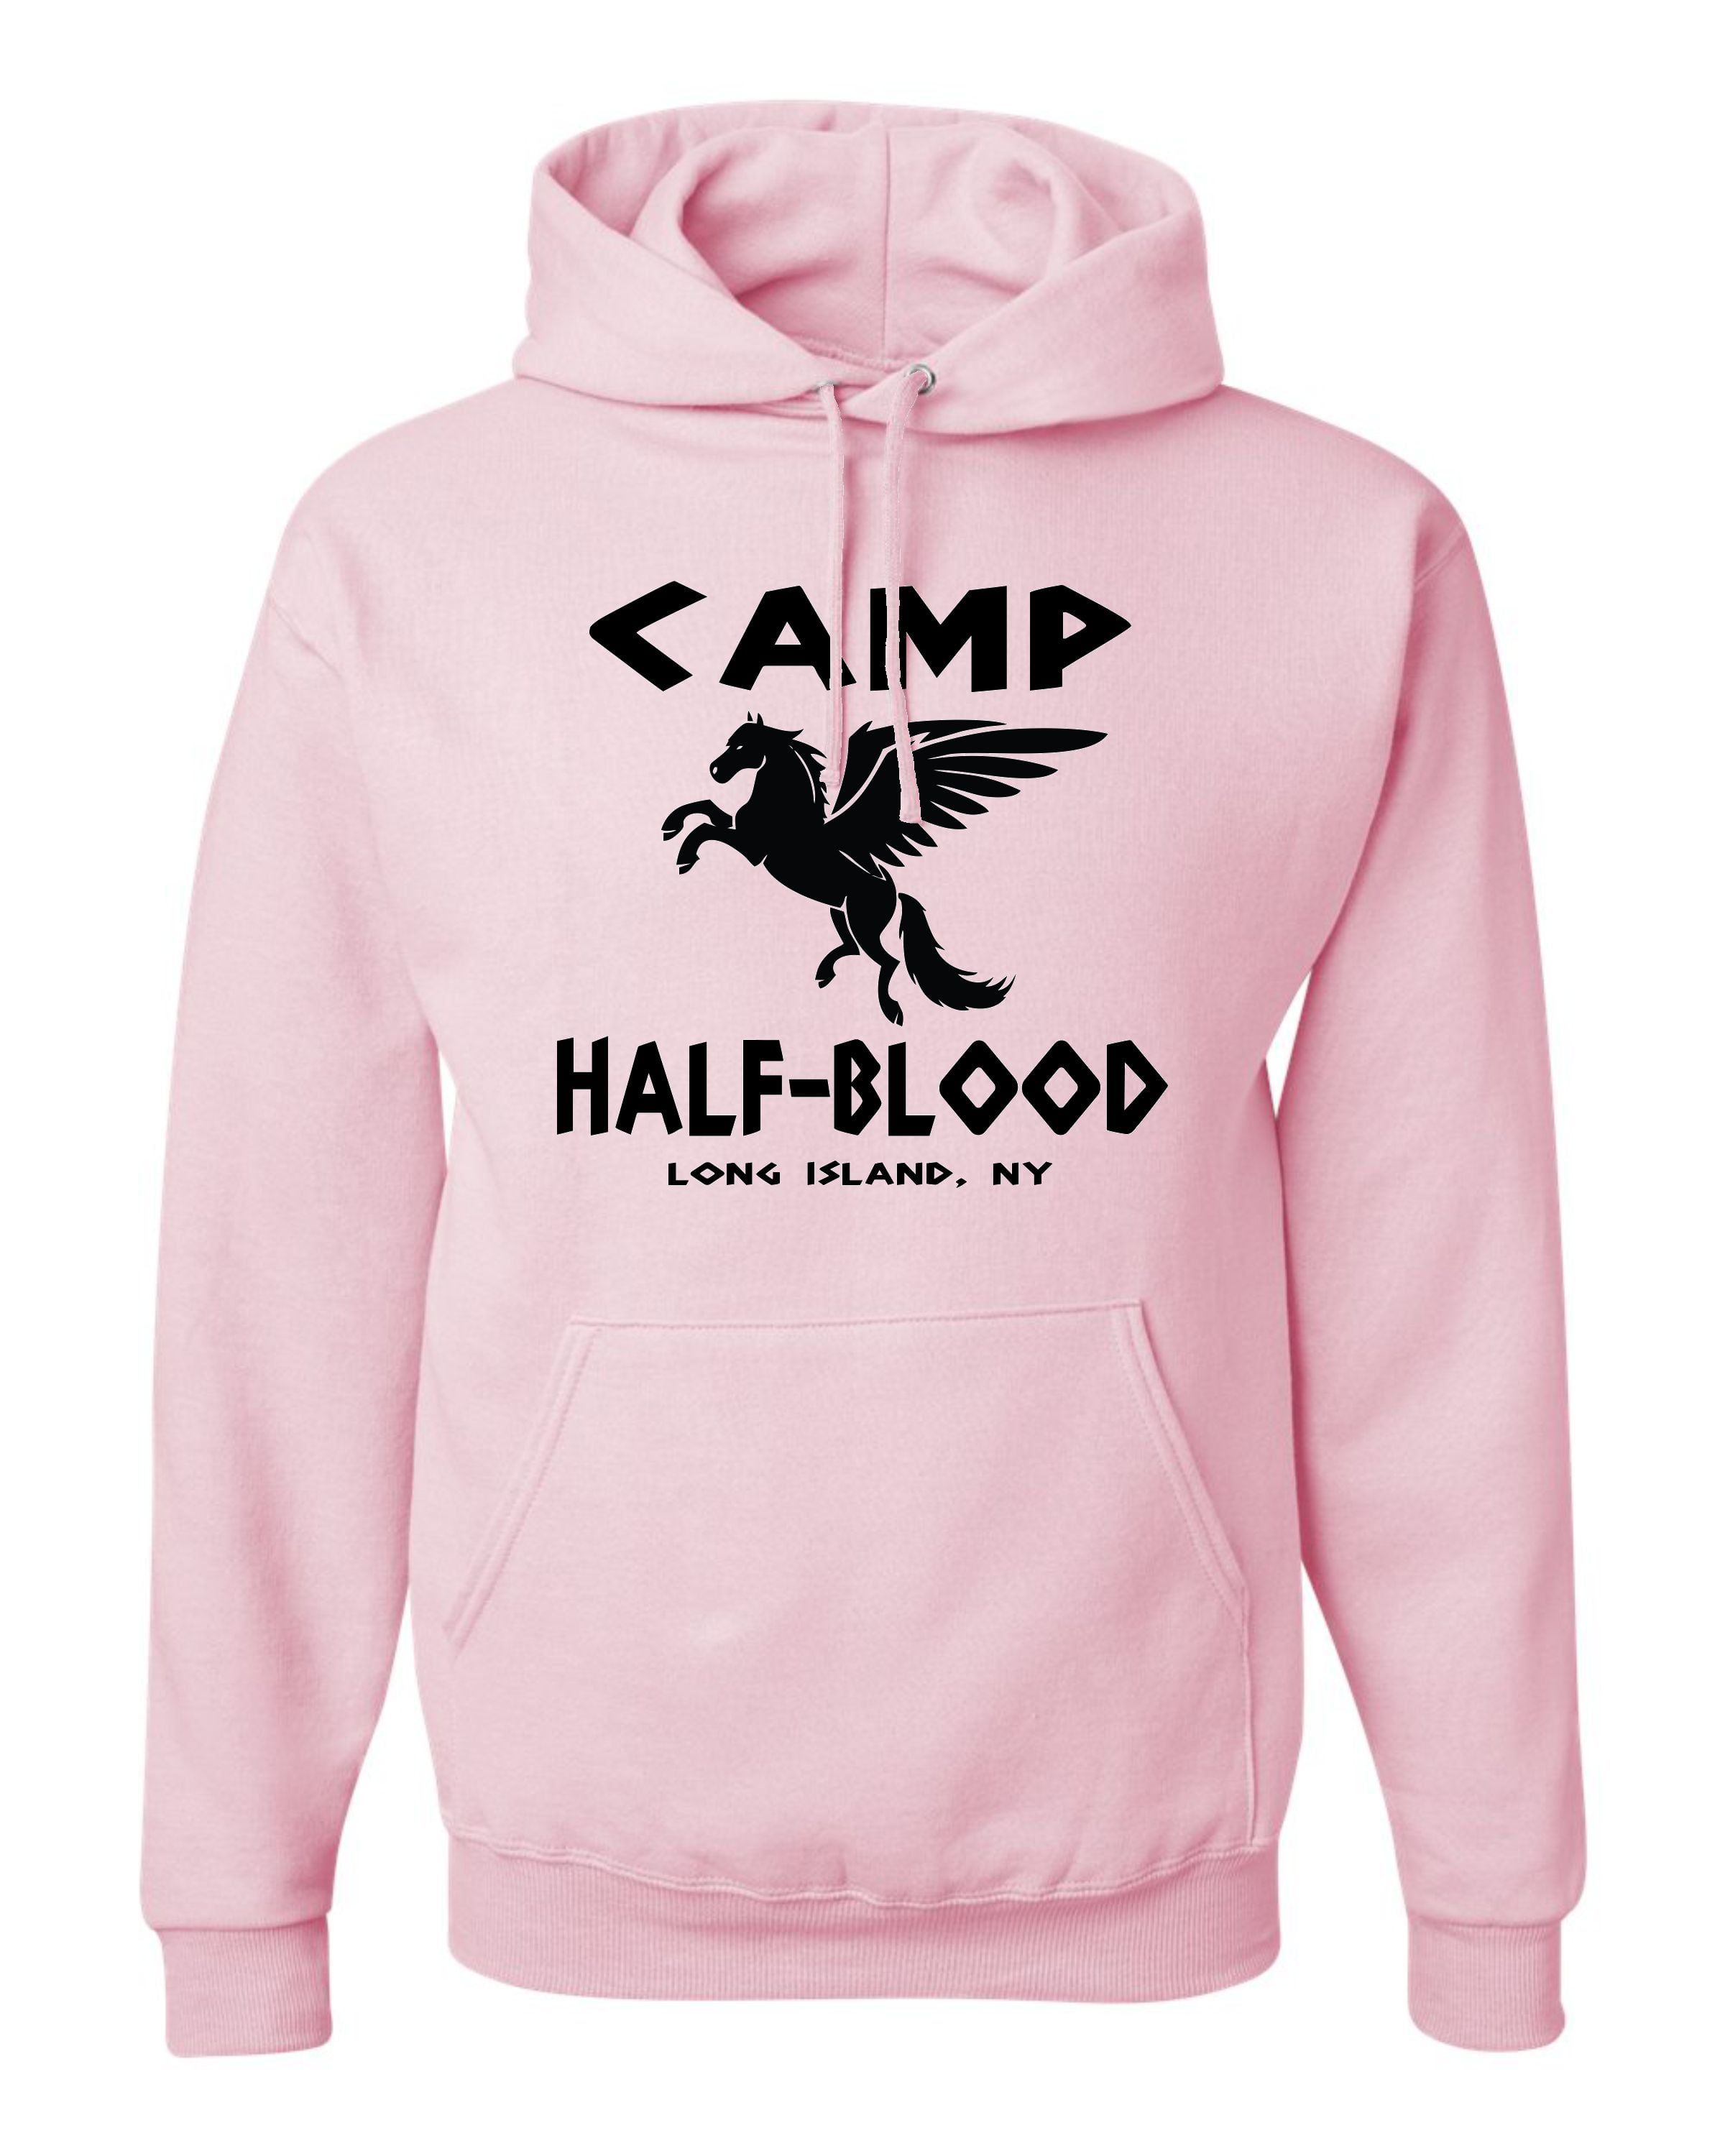 Camp Half-Blood Unisex Hooded Sweatshirt